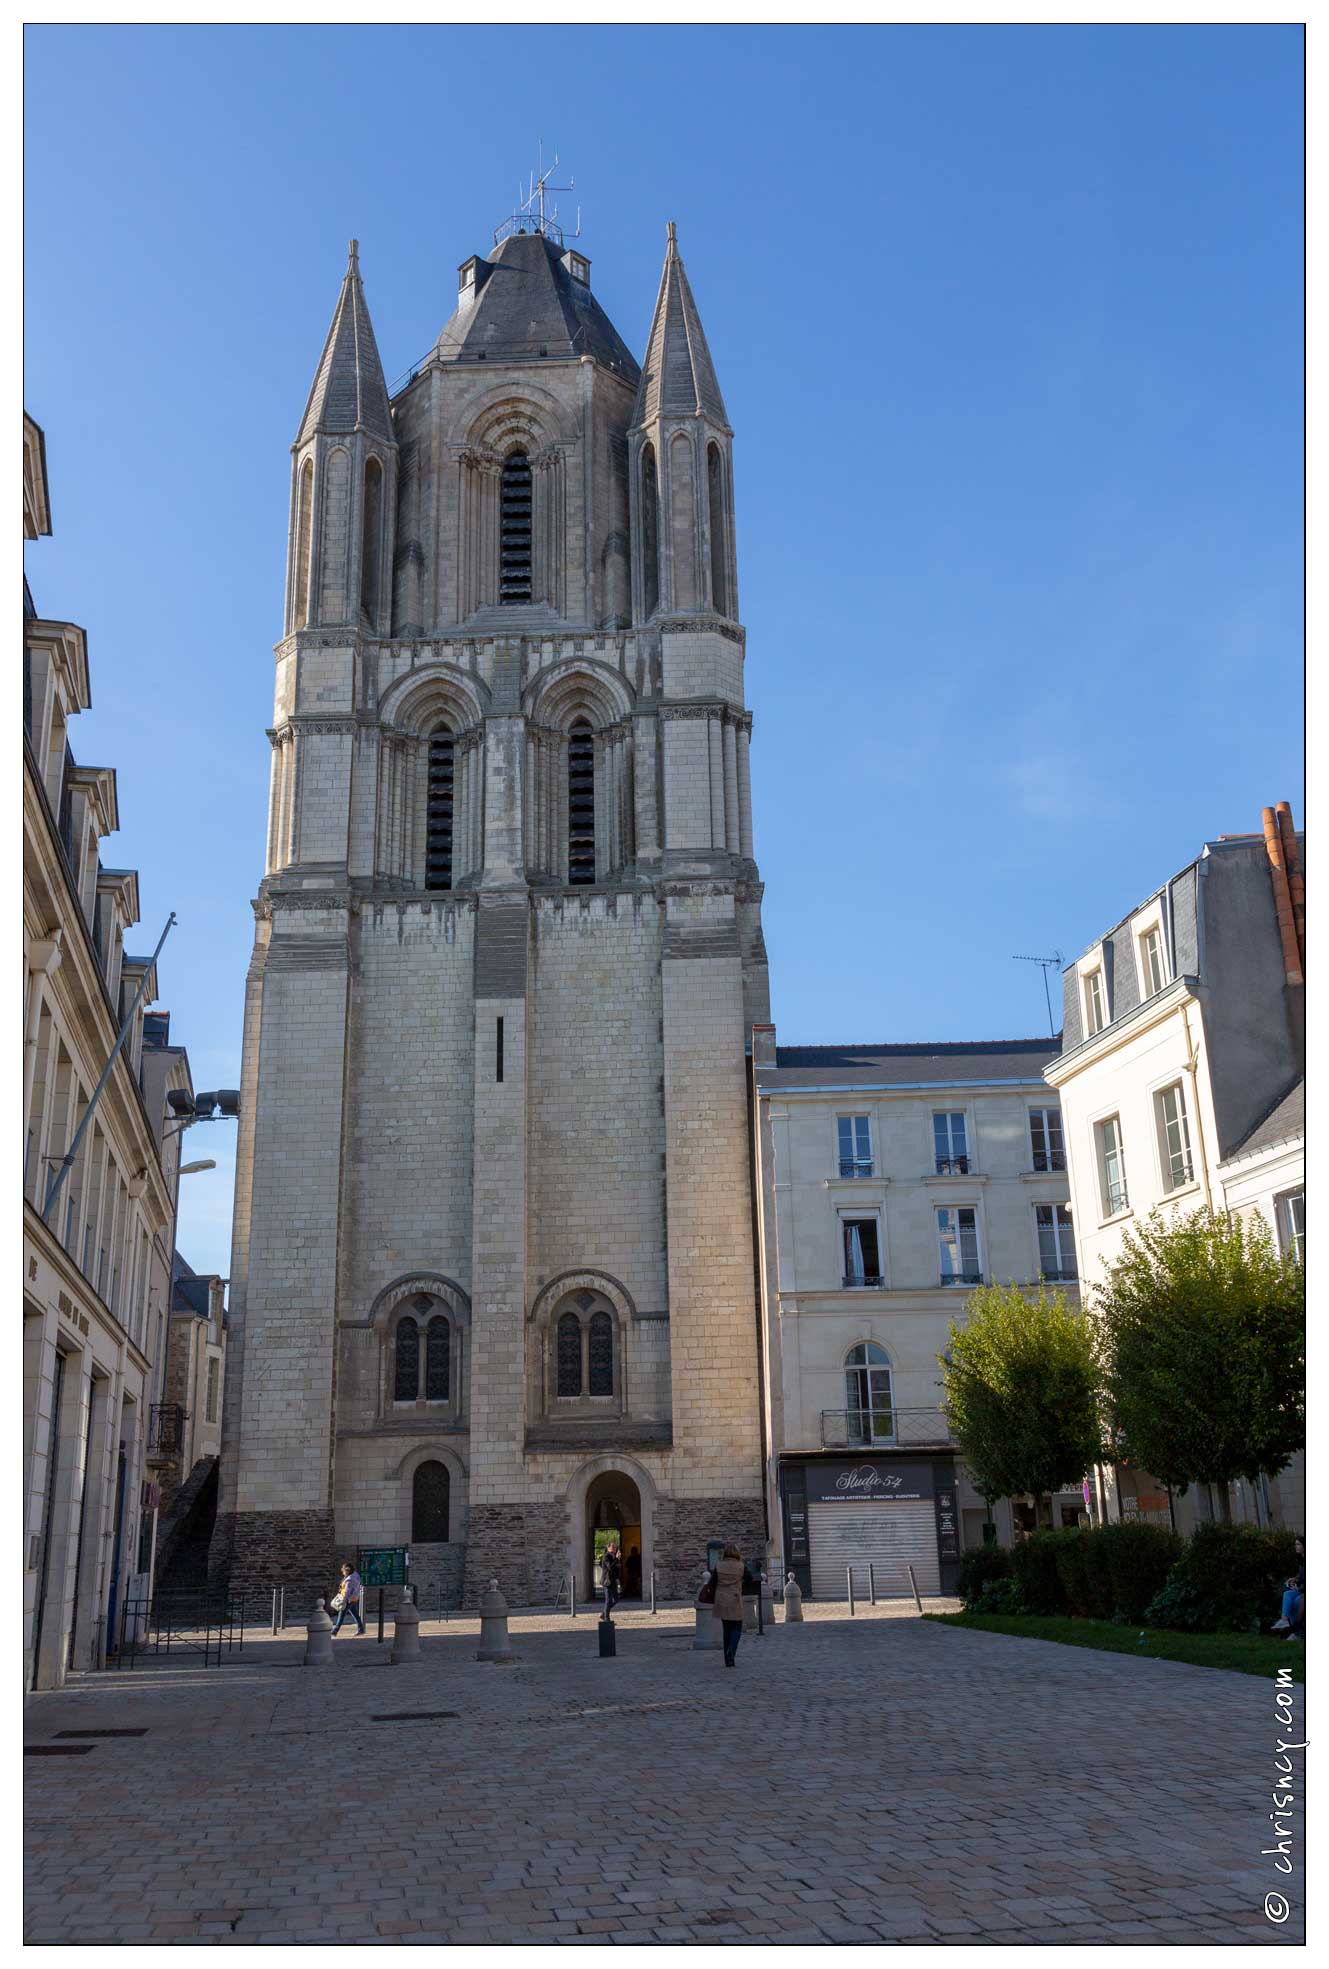 20181008-056_3121-Angers_Tour_Saint_Aubin.jpg